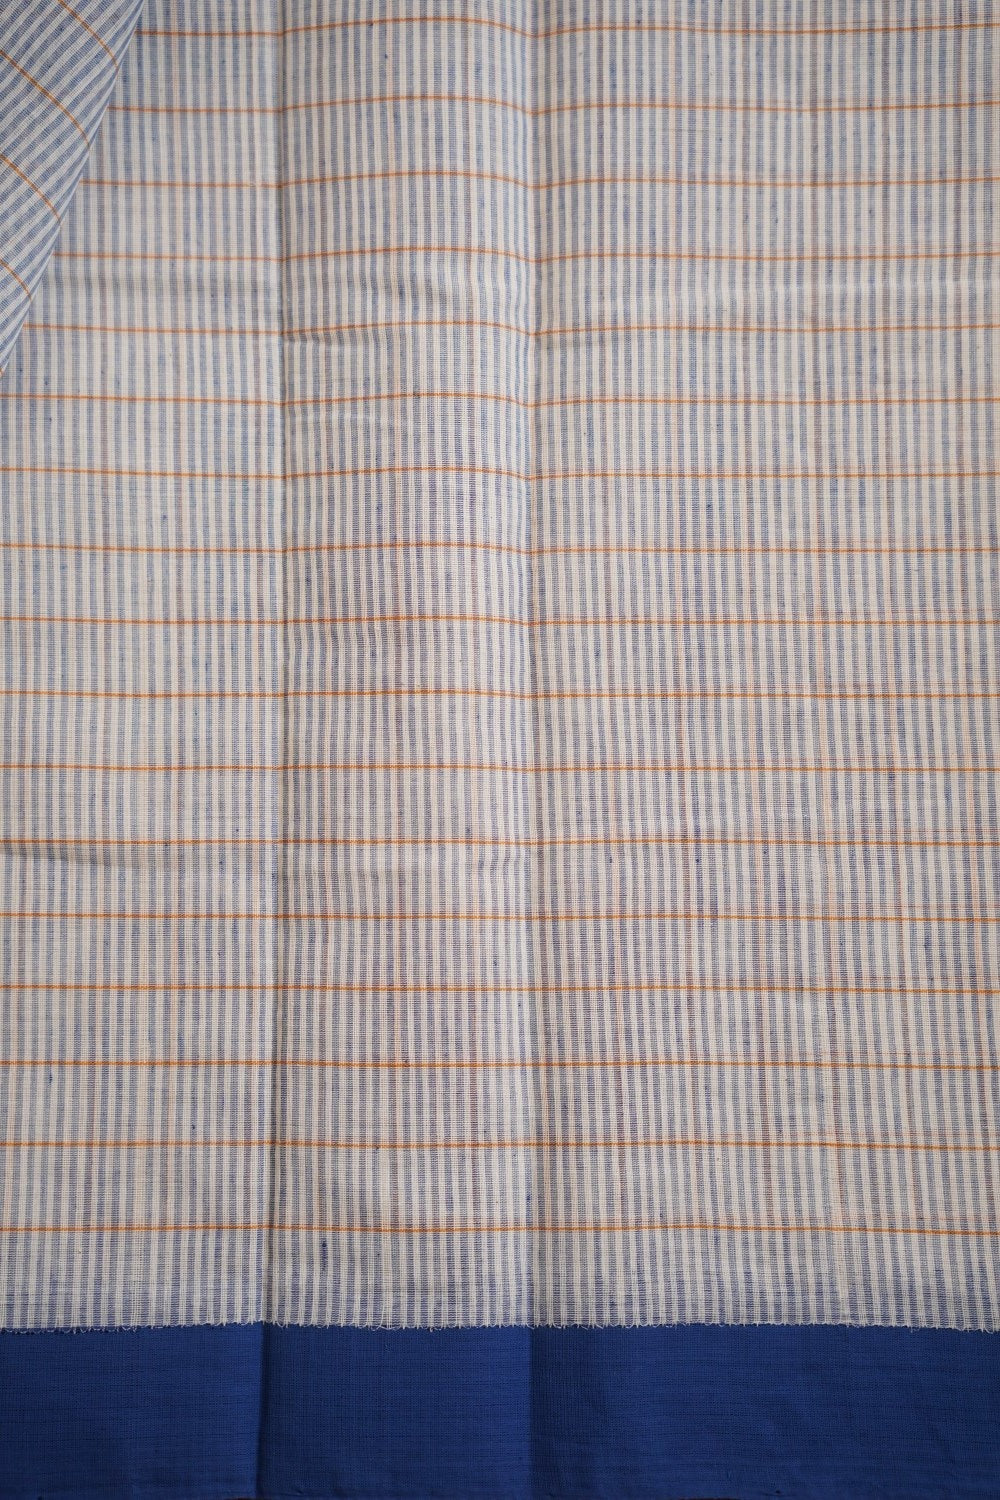 Ponduru handloom Cotton Saree PC9743